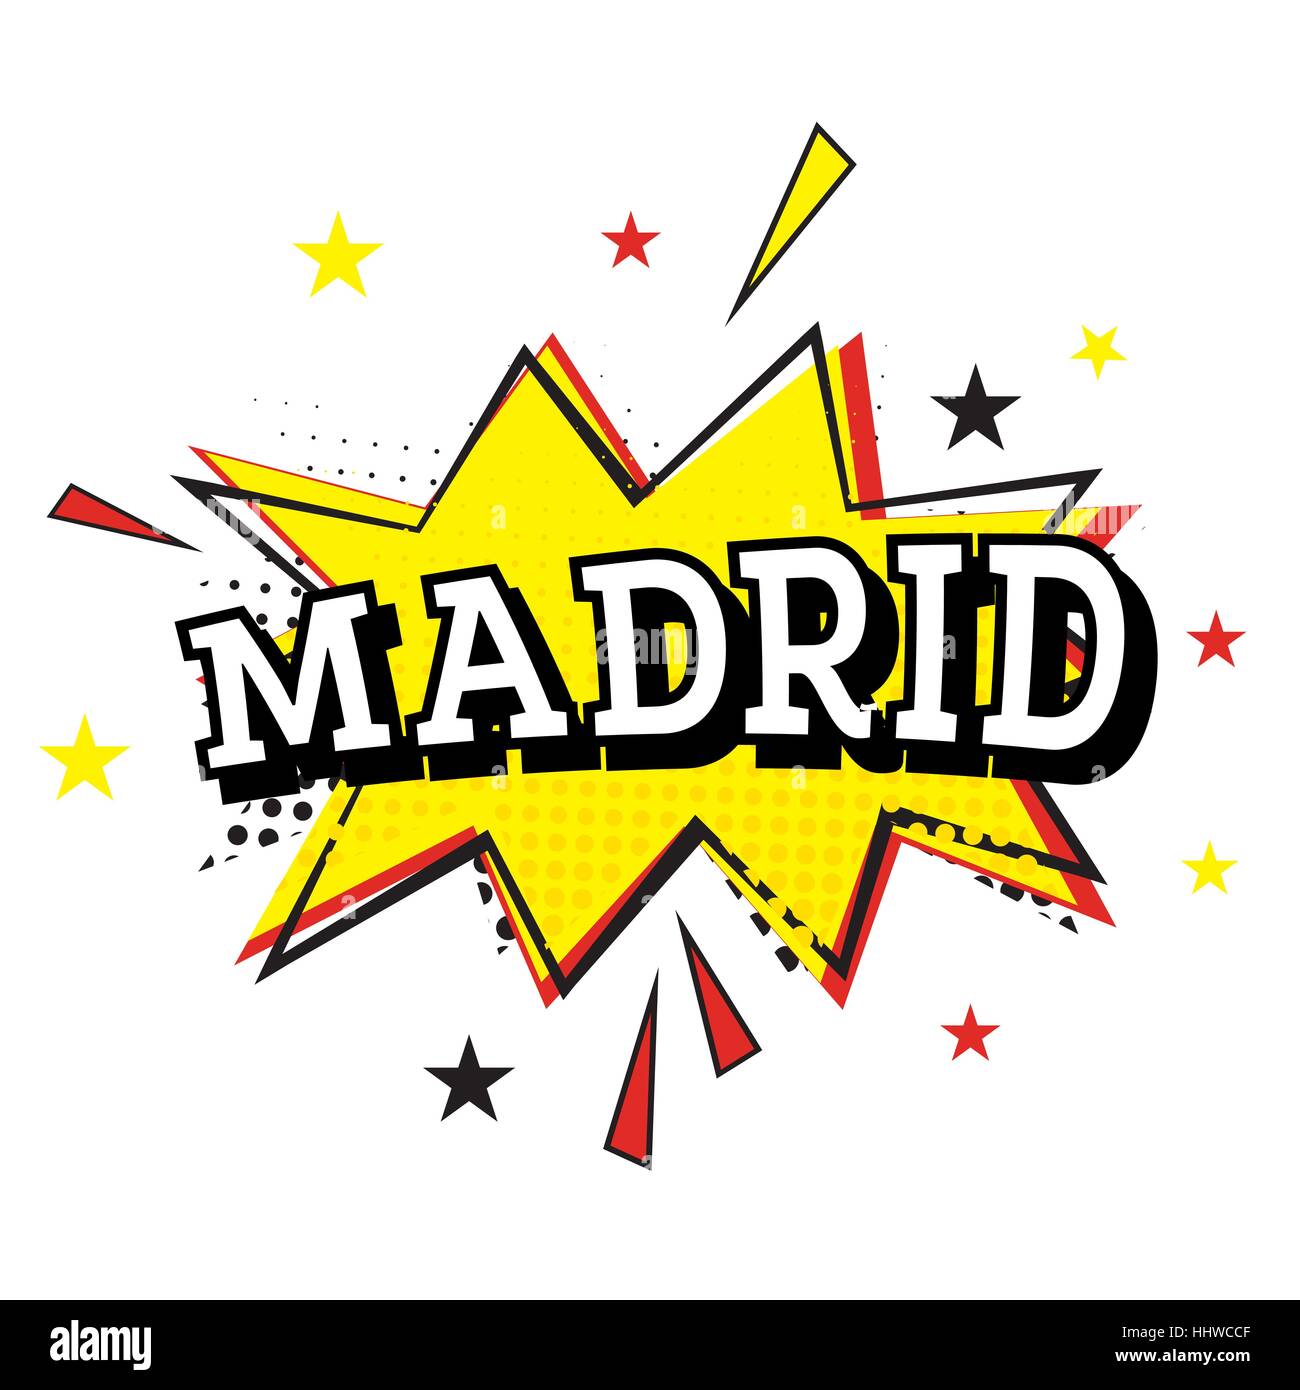 Madrid. Comic Text in Pop Art Style. Vector Illustration Stock Vector